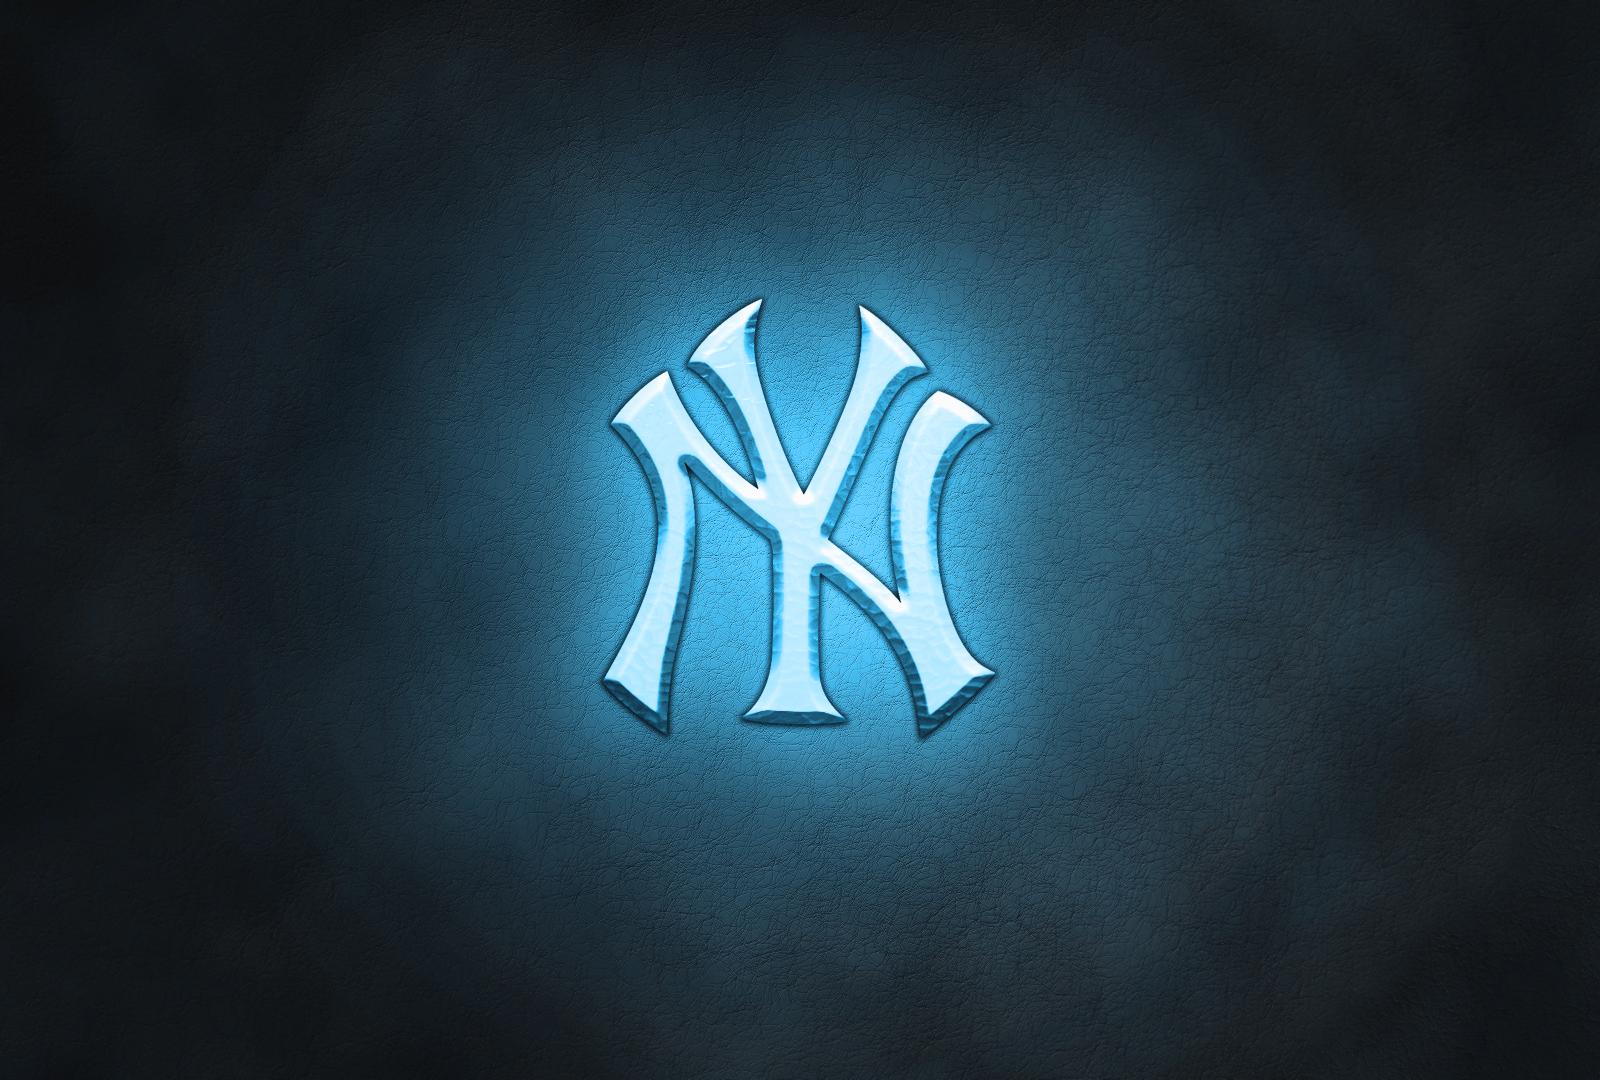 Best Baseball Yankees Logo Wallpapers HD Computer Backgrounds Image